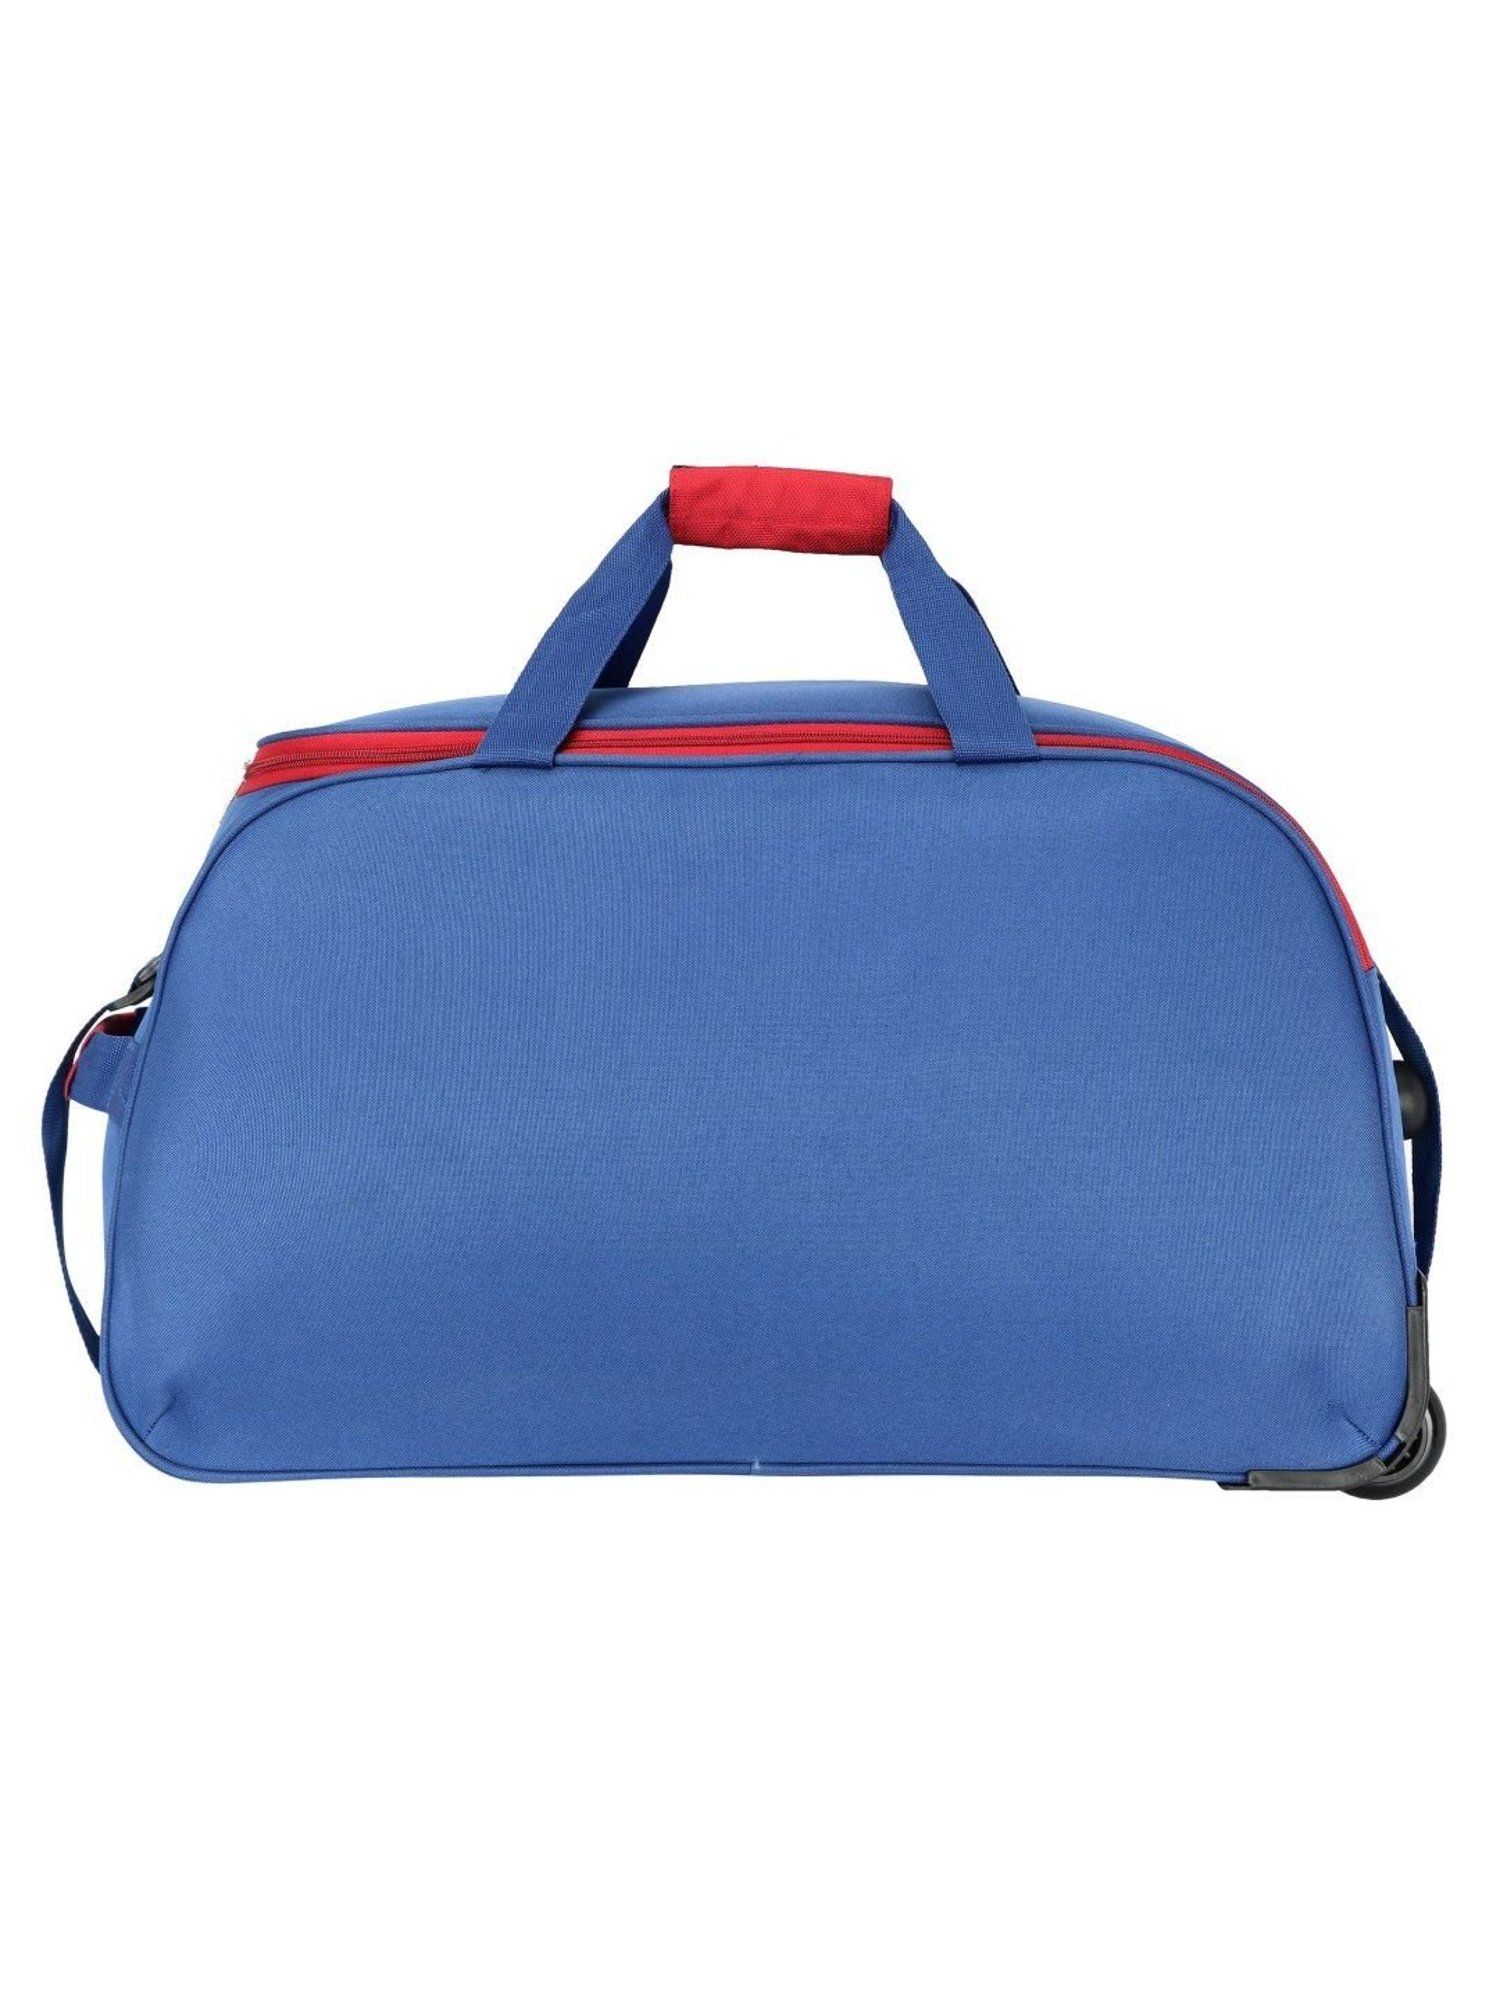 The Clownfish Stark Series Luggage Polycarbonate Hard Case 8 Wheel Trolley  Bag with Double TSA Locks